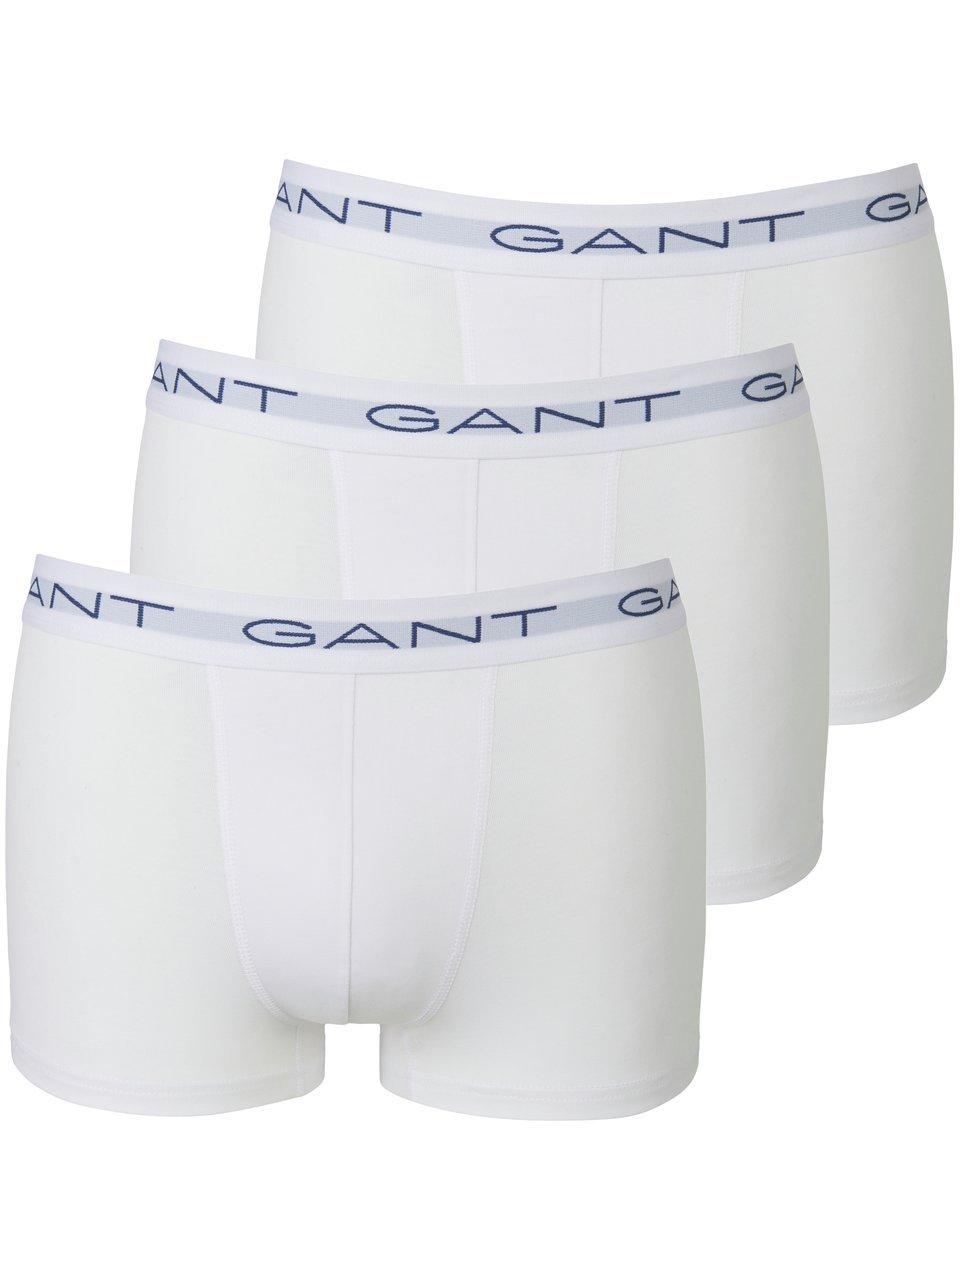 Gant - Boxershorts 3-Pack Wit - Maat L - Body-fit